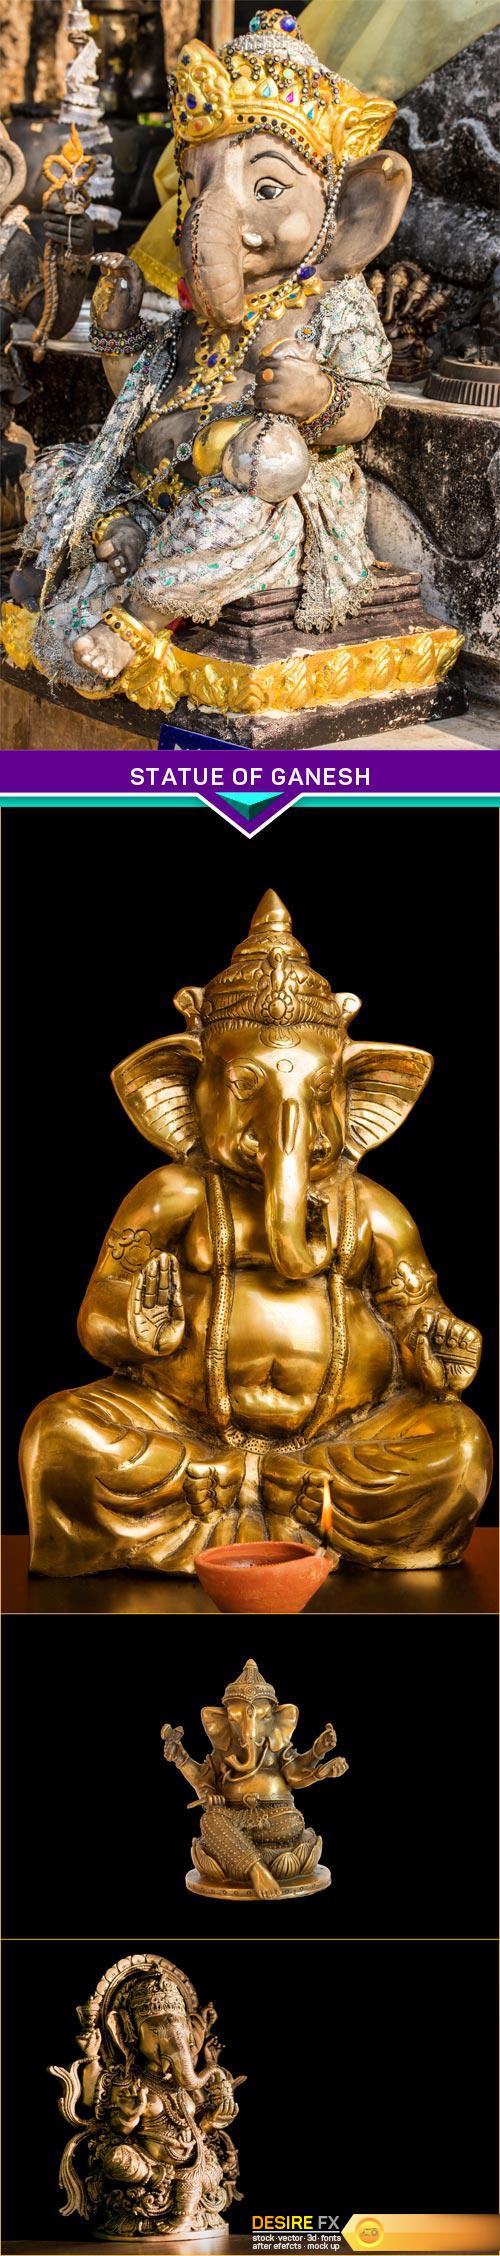 Statue of Ganesh 4x JPEG